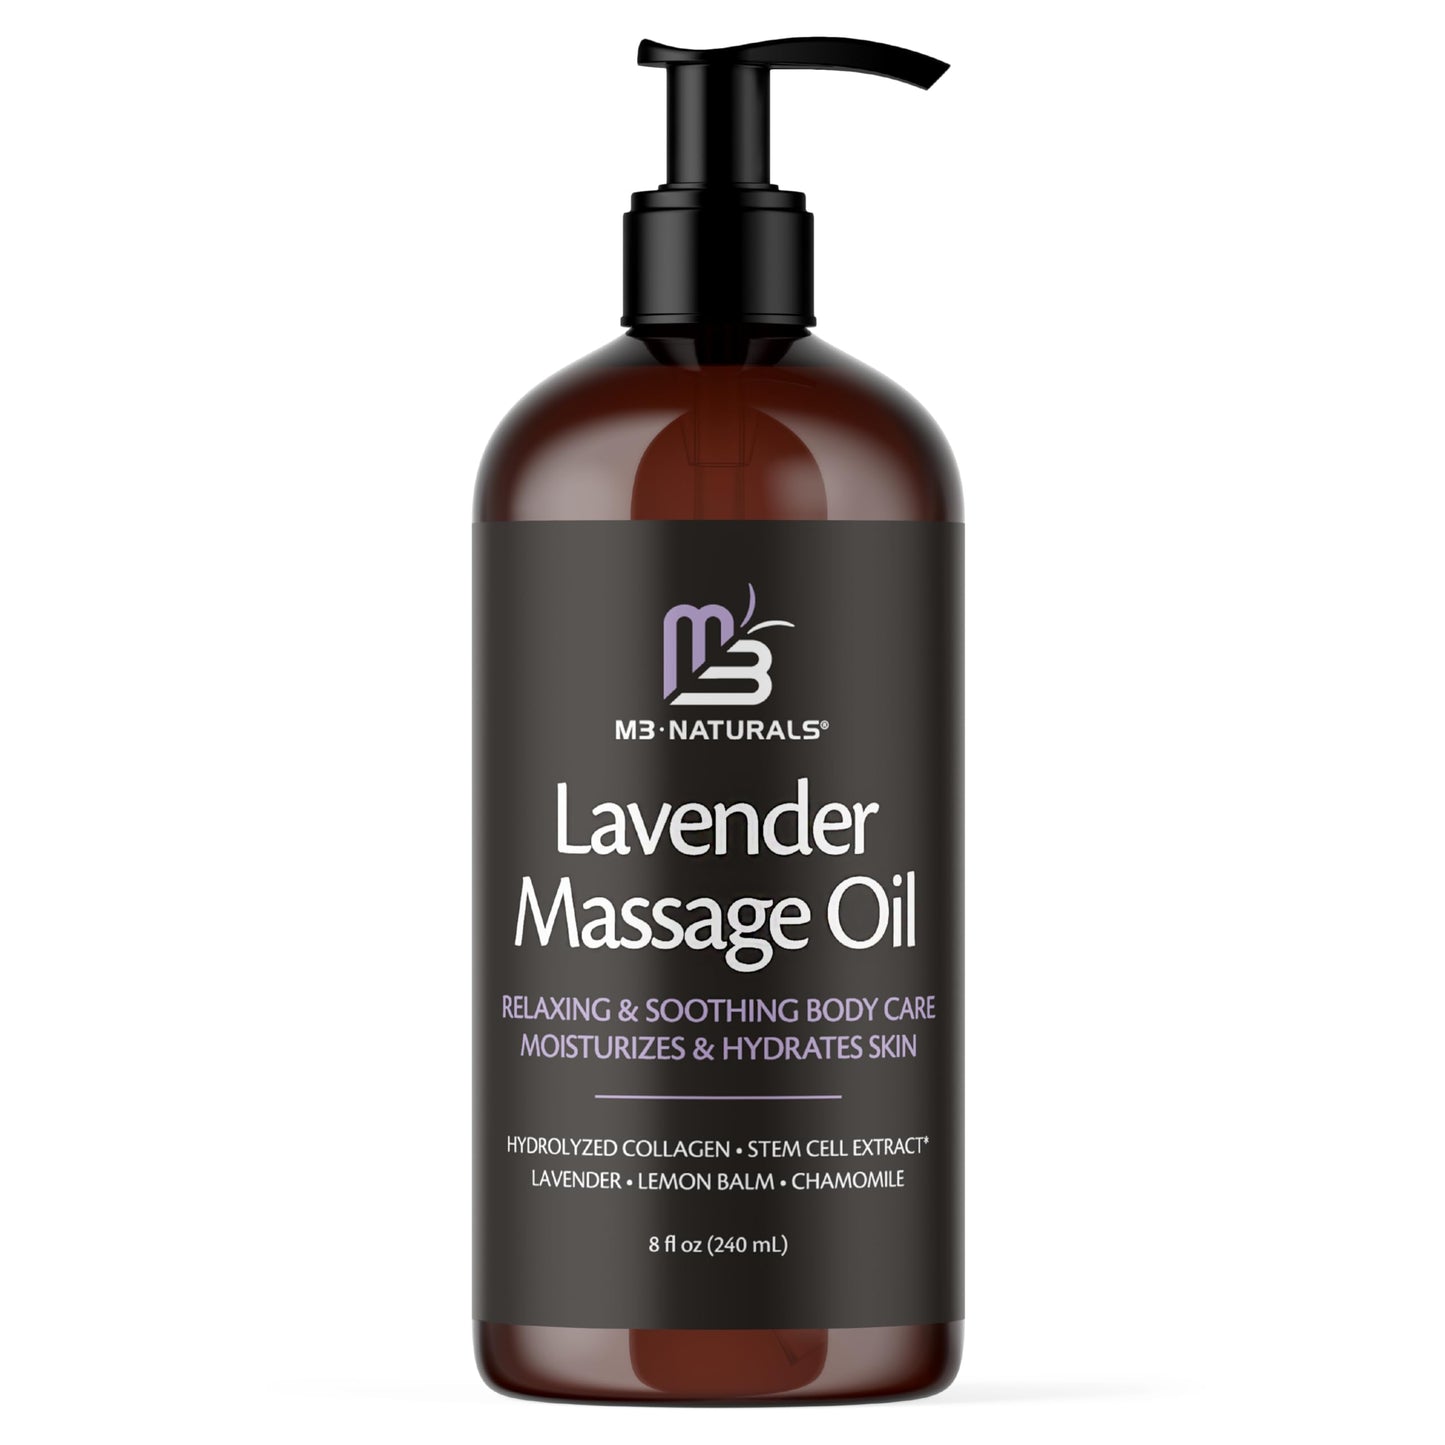 Lavender Massage Oil with Collagen and Stem Cells - Skin Tightening Massage